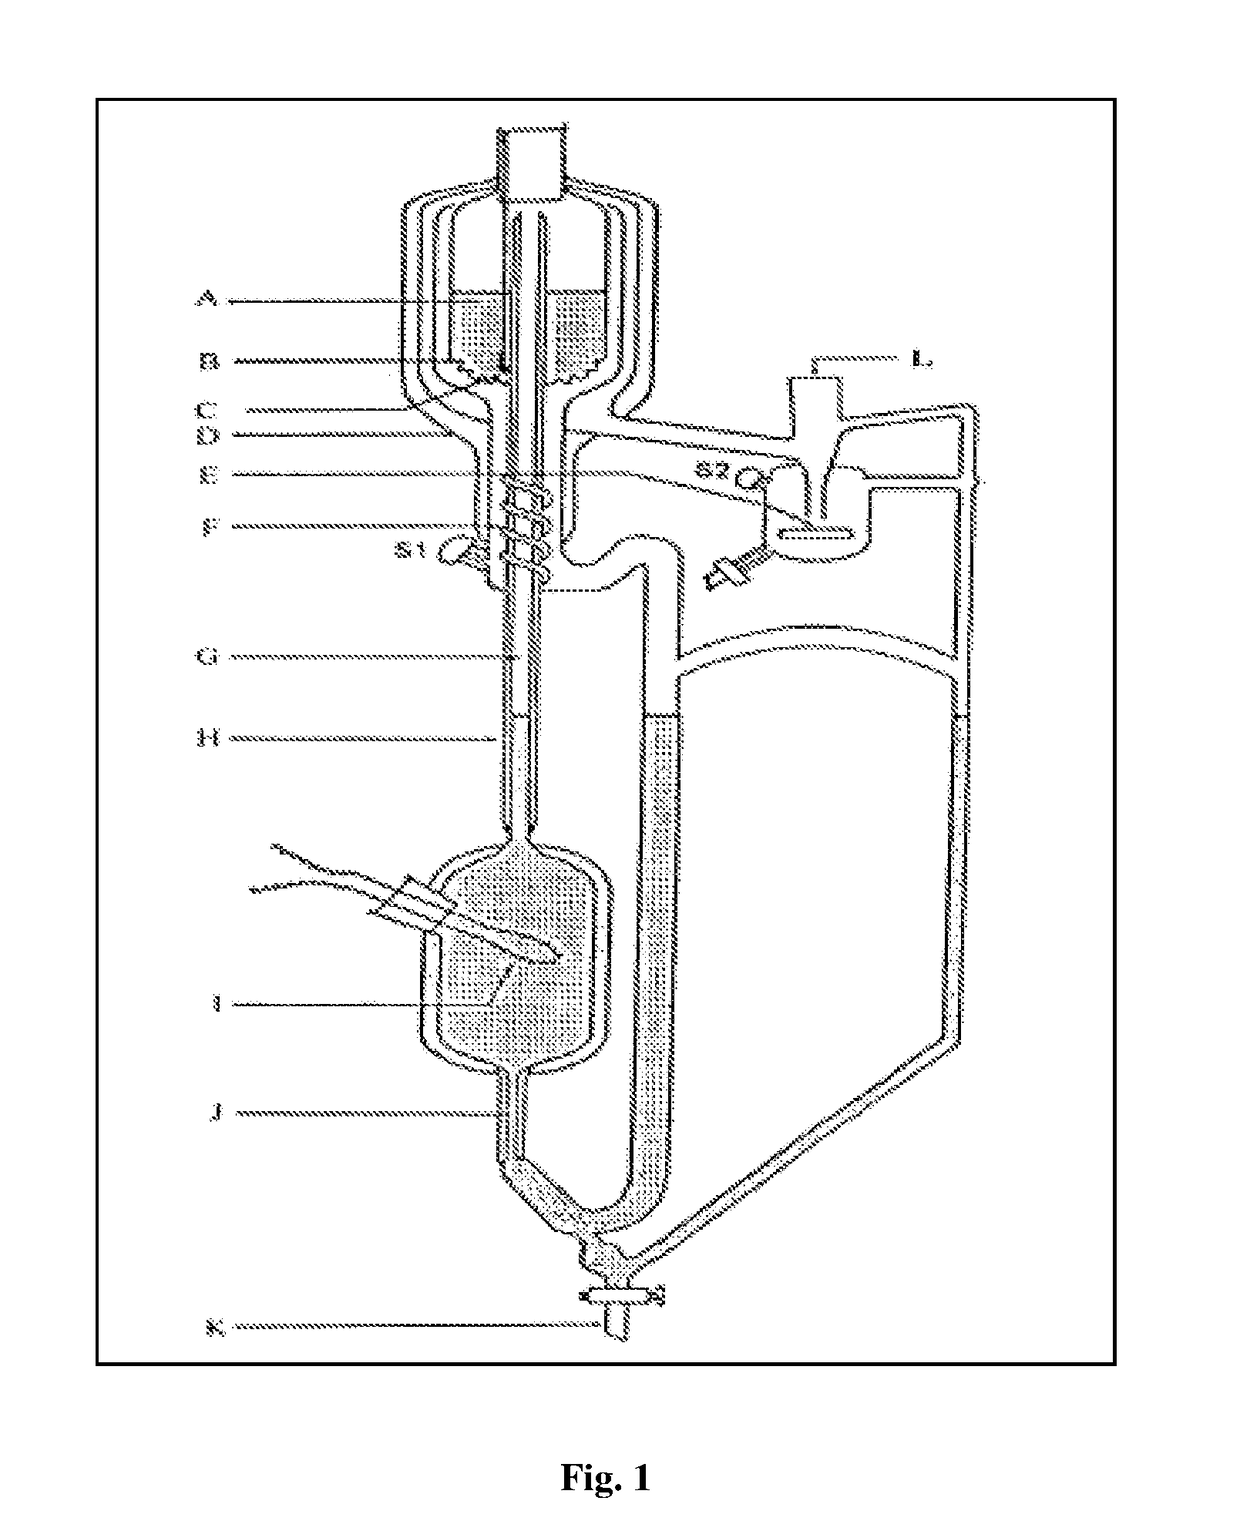 Apparatus for vapour-liquid-equilibrium (VLE) data measurement